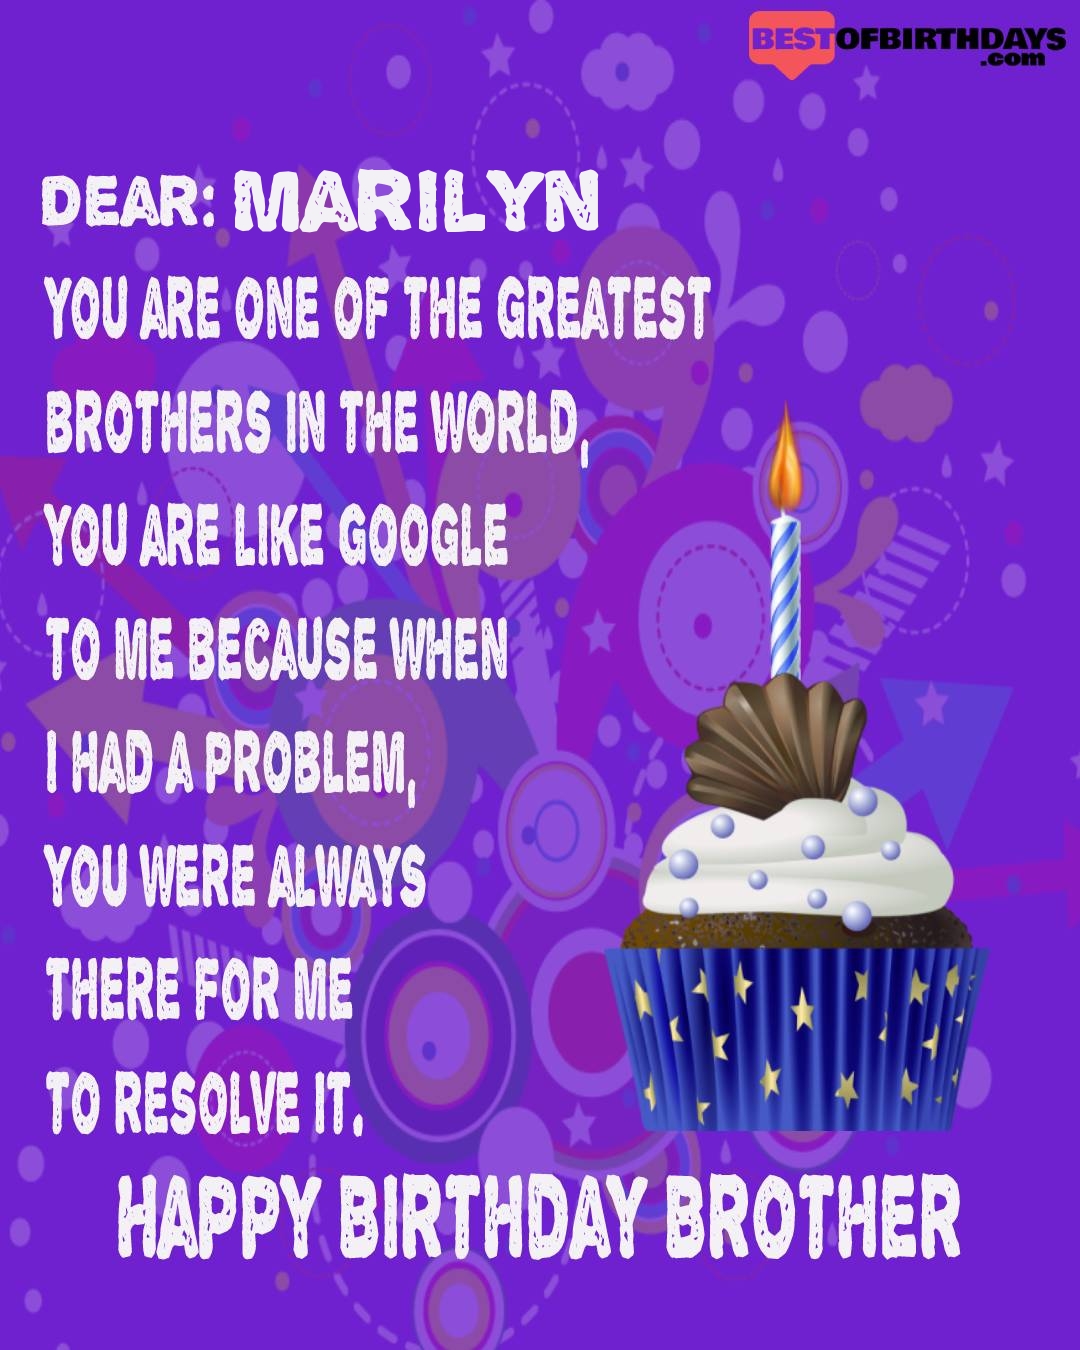 Happy birthday marilyn bhai brother bro